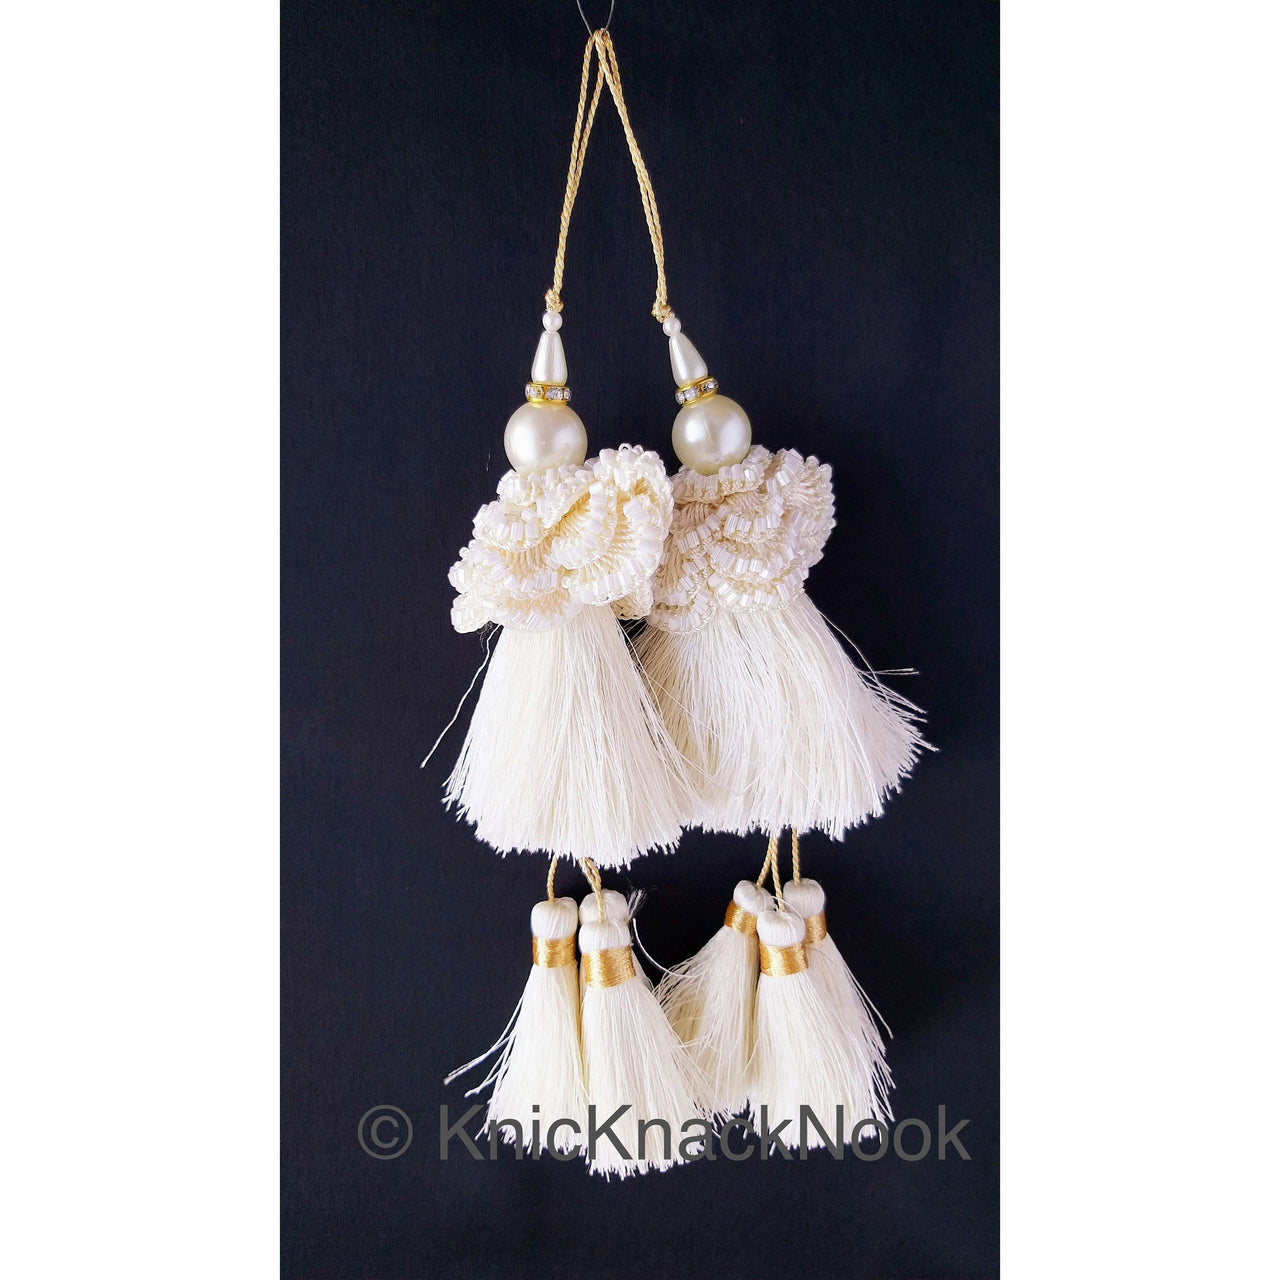 Off White Tassels With Pearl and Beads Embellishments Indian Tassels Wedding Bridal Latkan, Ethnic Tassels, Indian Latkan